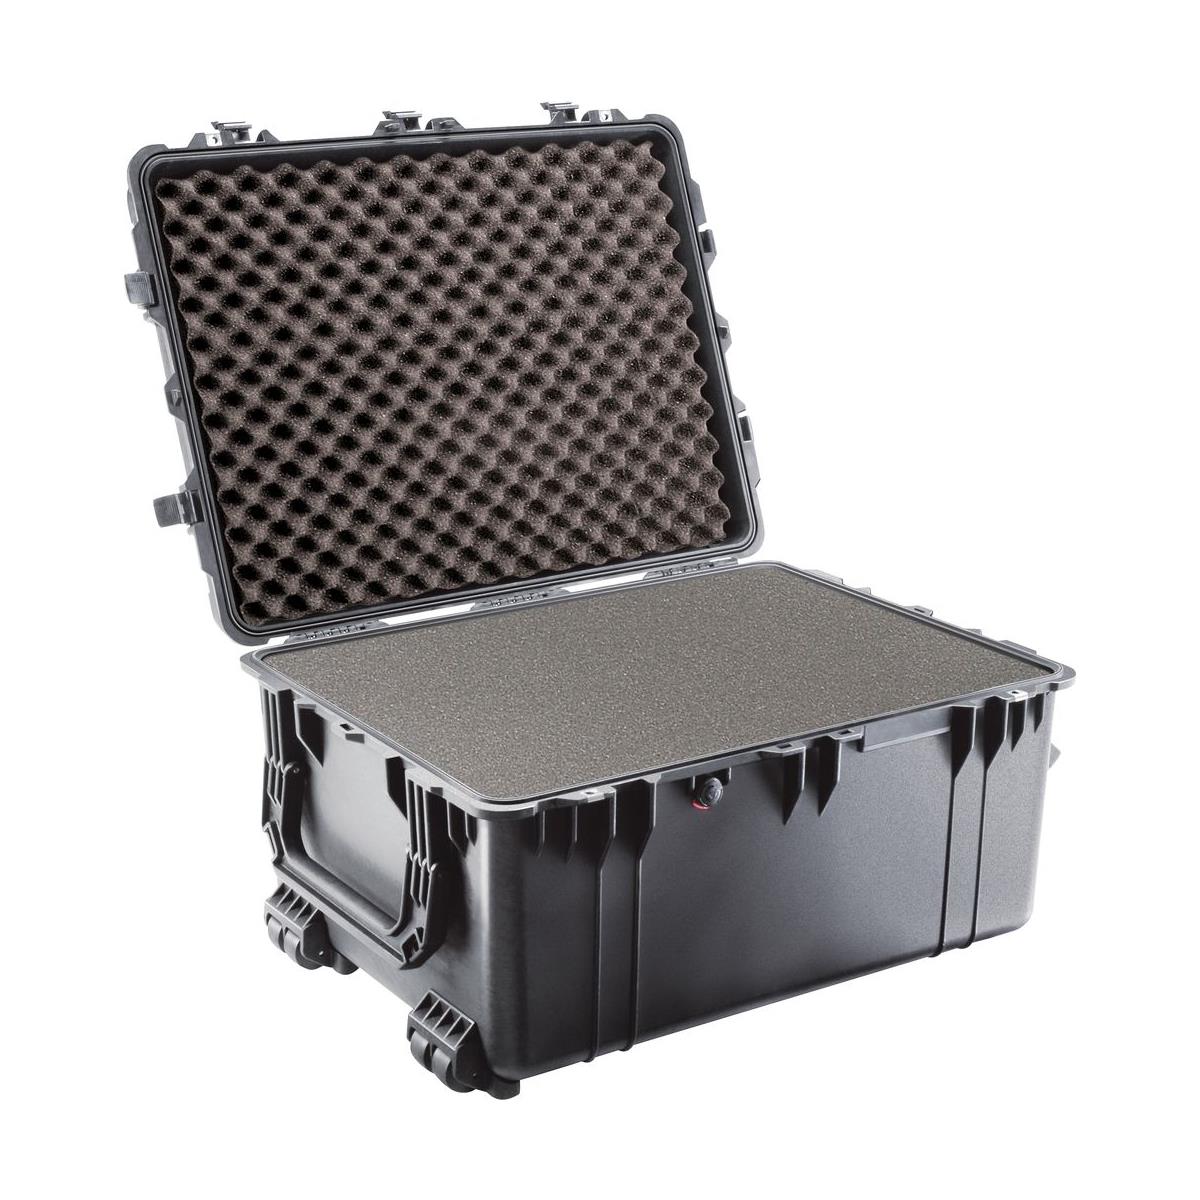 Pelican 1630 Watertight Hard Case with Cubed Foam Interior & 4 Wheels - Black -  1630-000-110